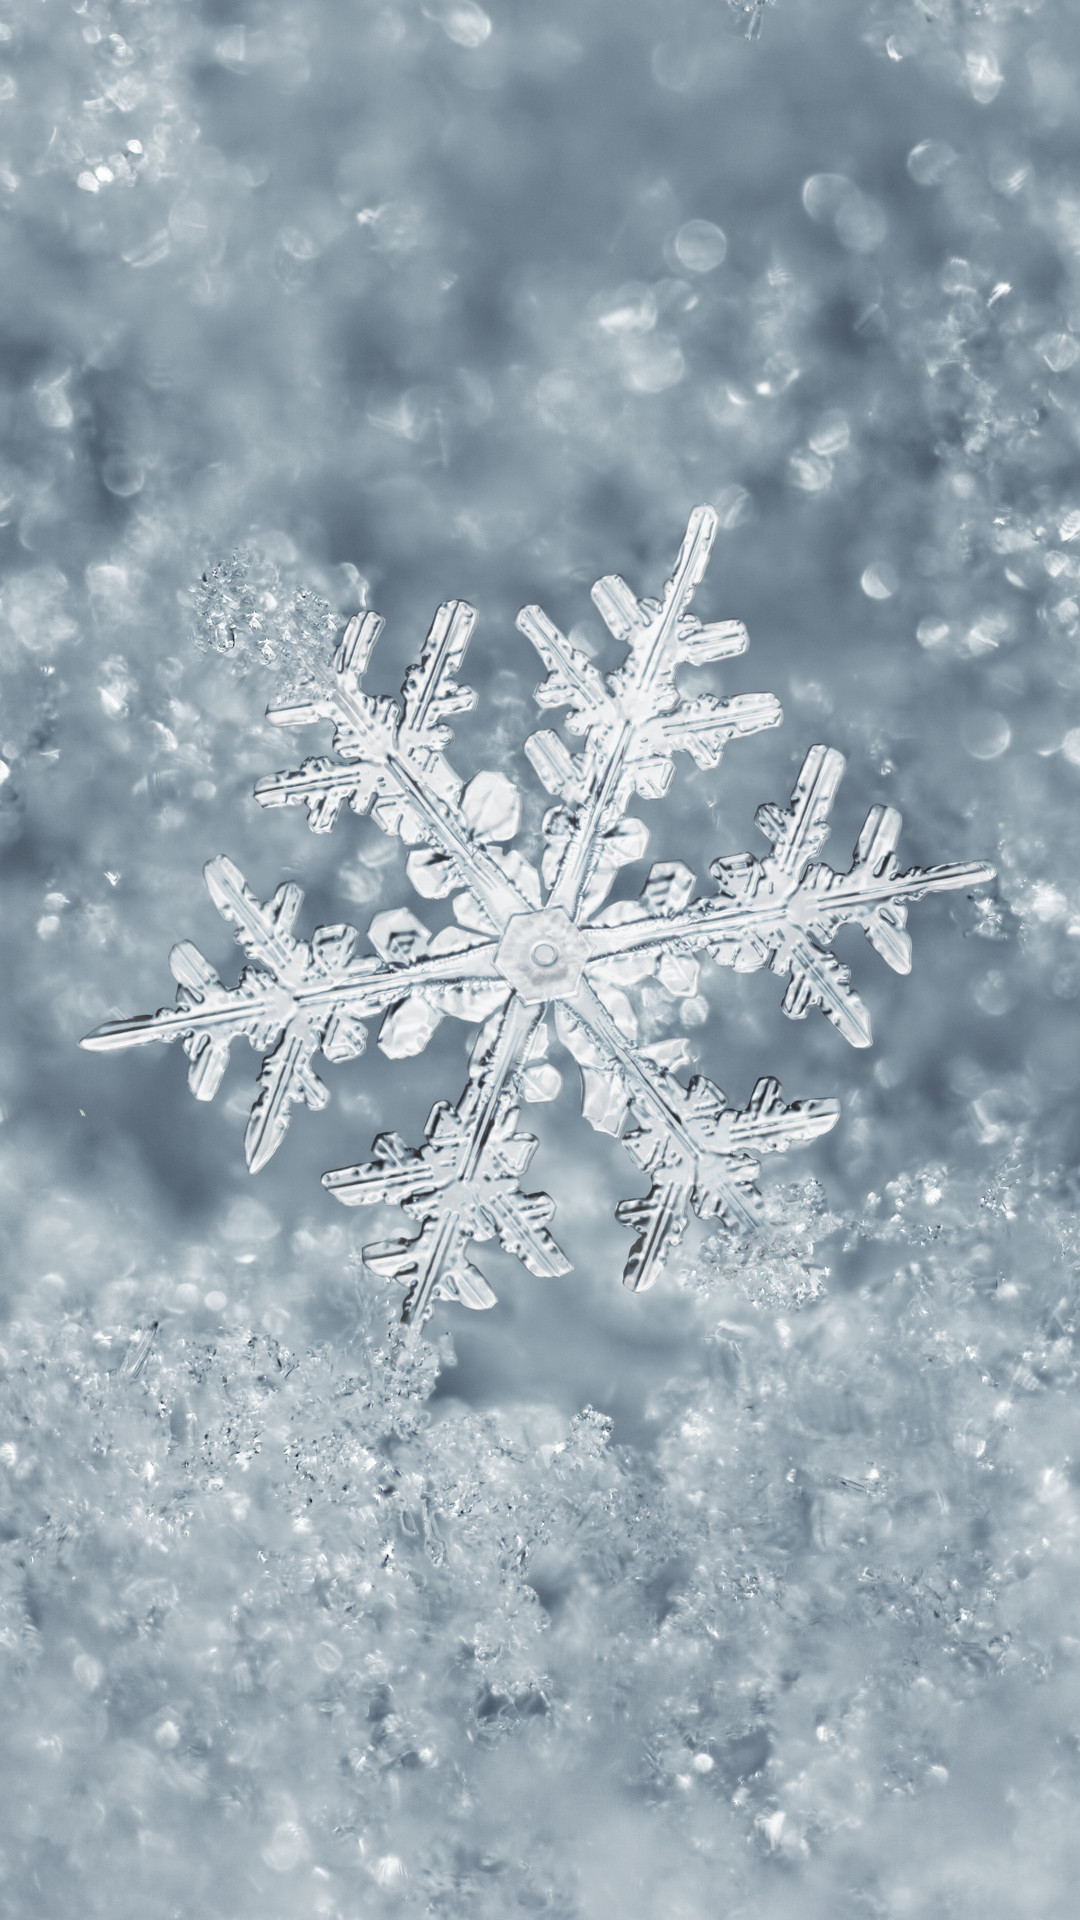 whatsapp magic wallpaper,frost,freezing,snowflake,winter,snow